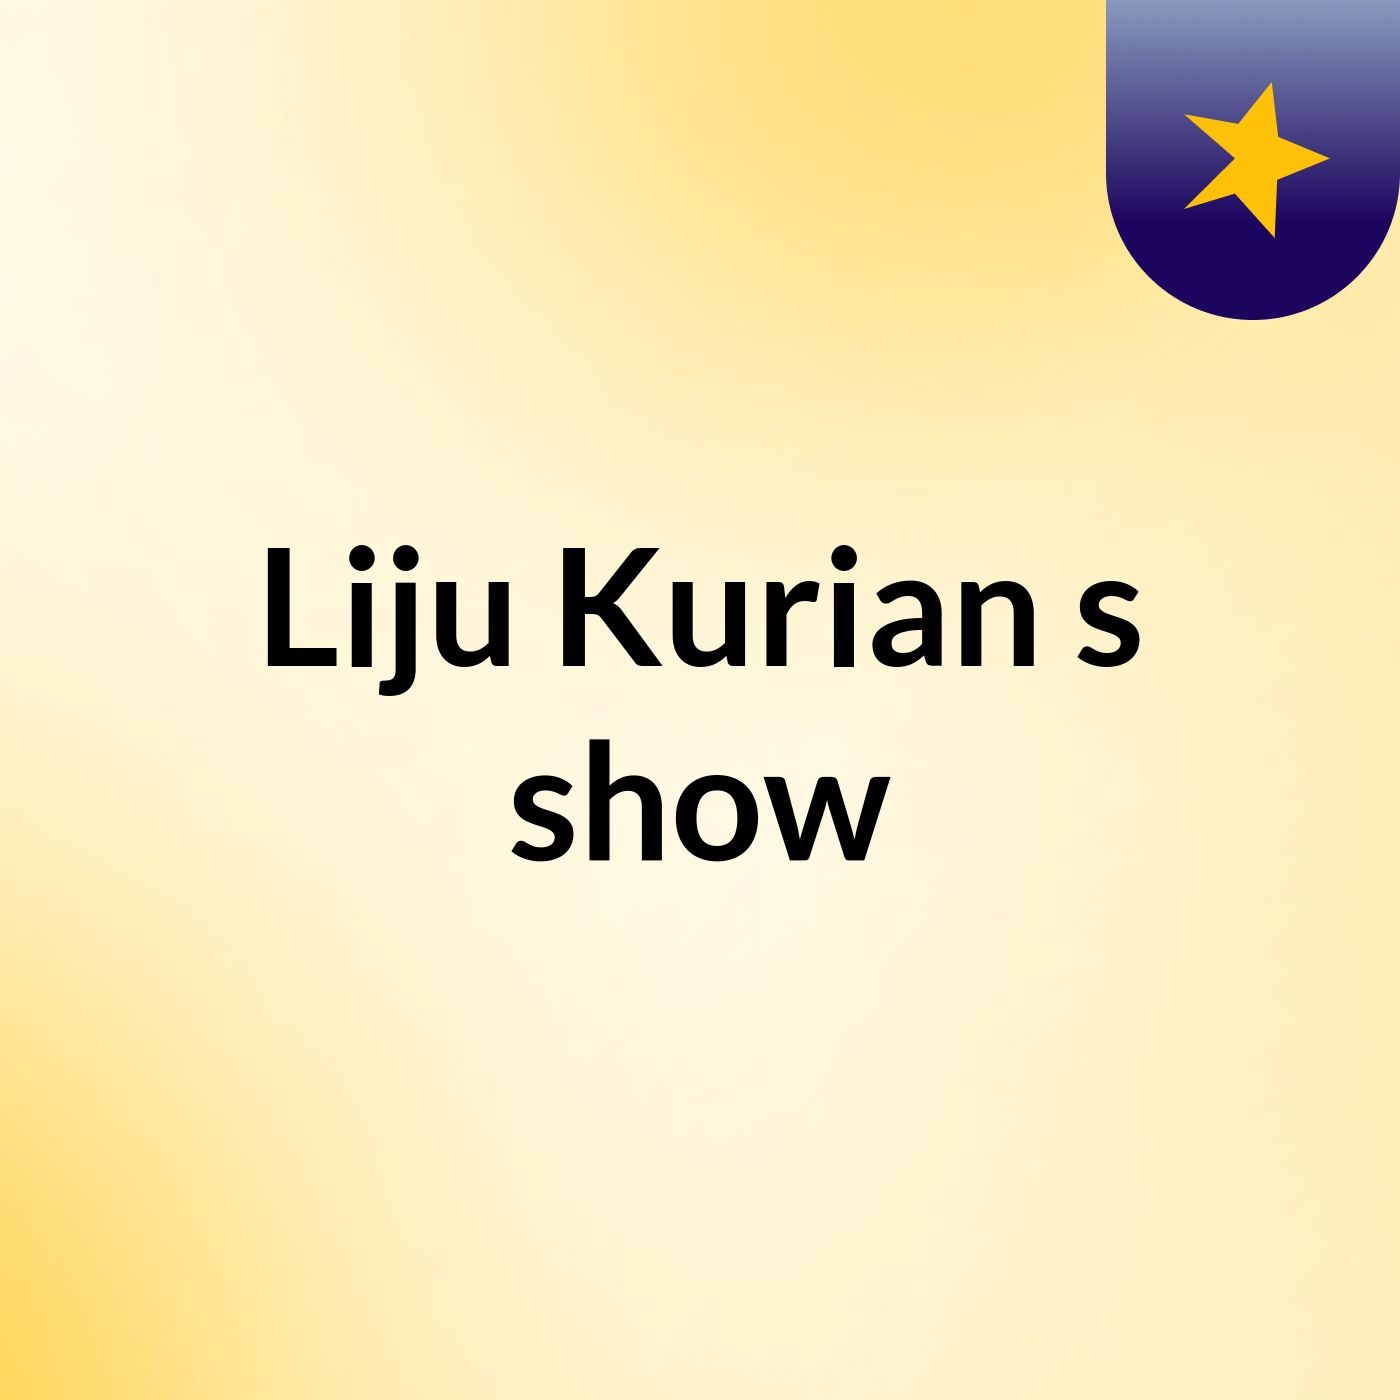 Liju Kurian's show